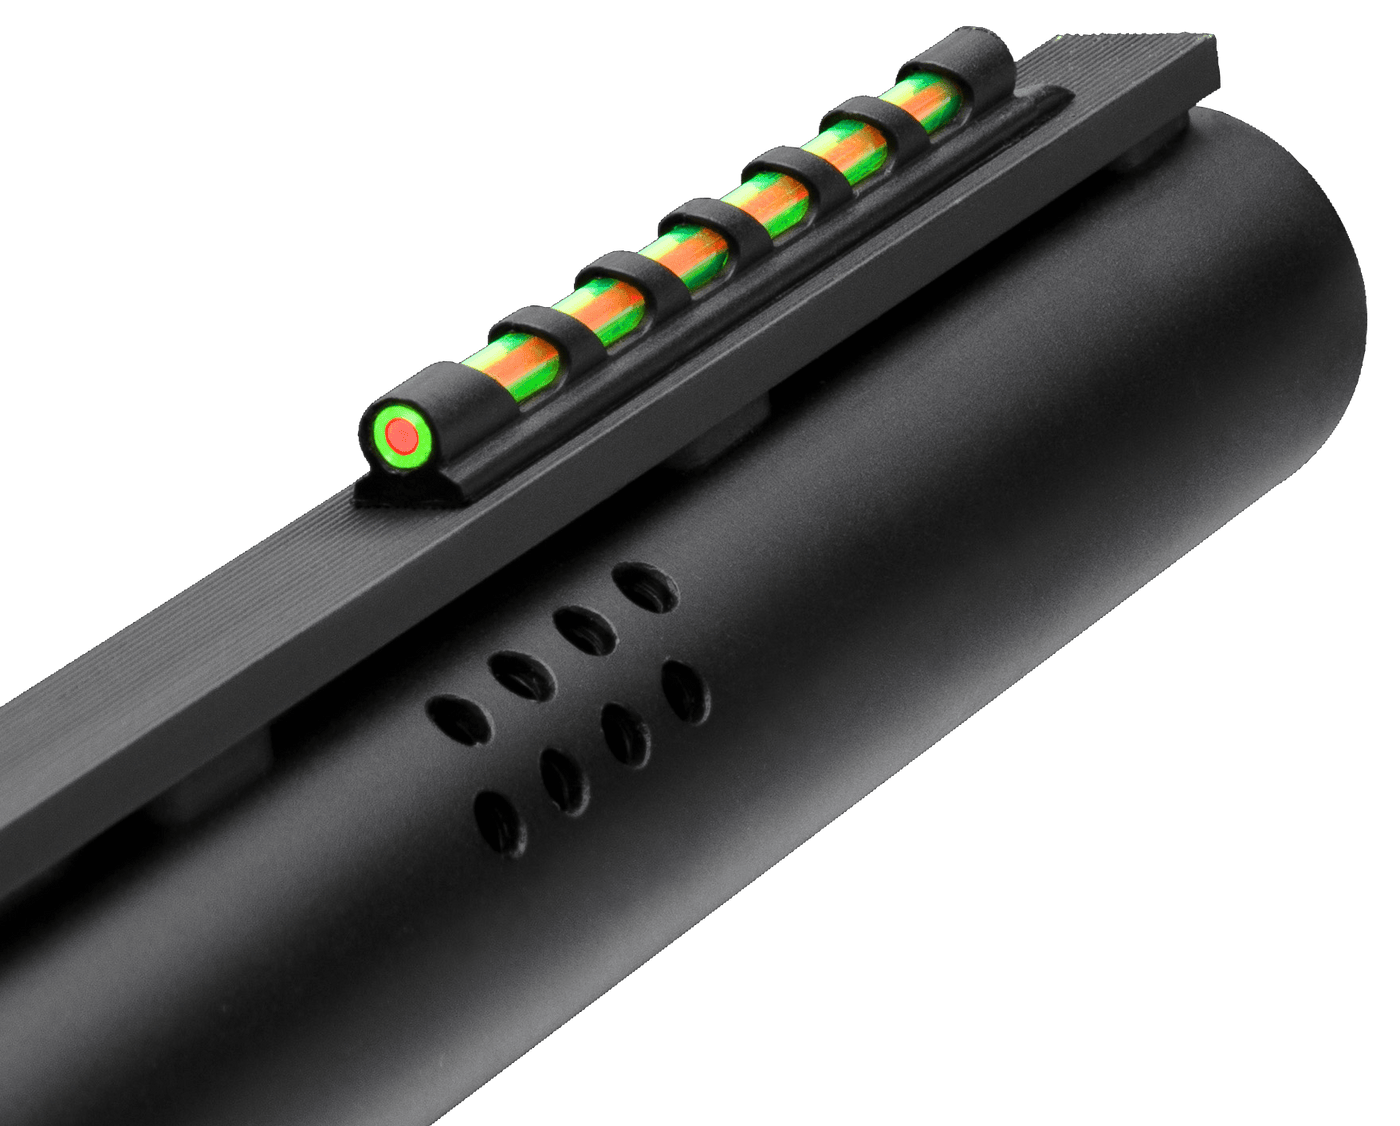 Truglo Truglo Glo-dot Universal Dual Fiber Firearm Accessories